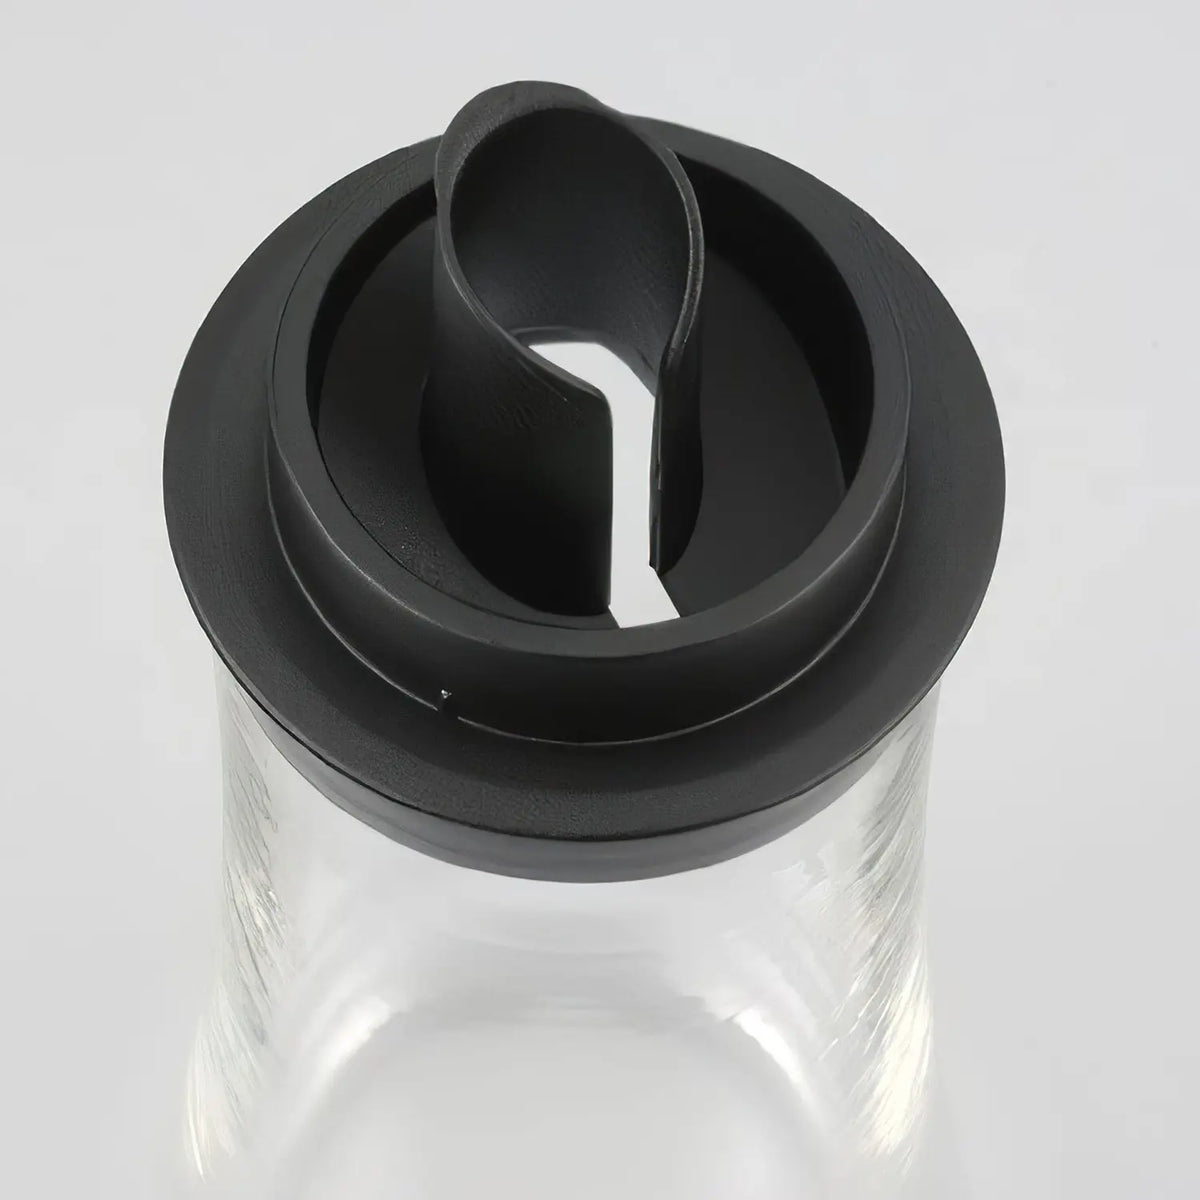 iwaki Heat Resistant Glass Lipped Bowl - Globalkitchen Japan